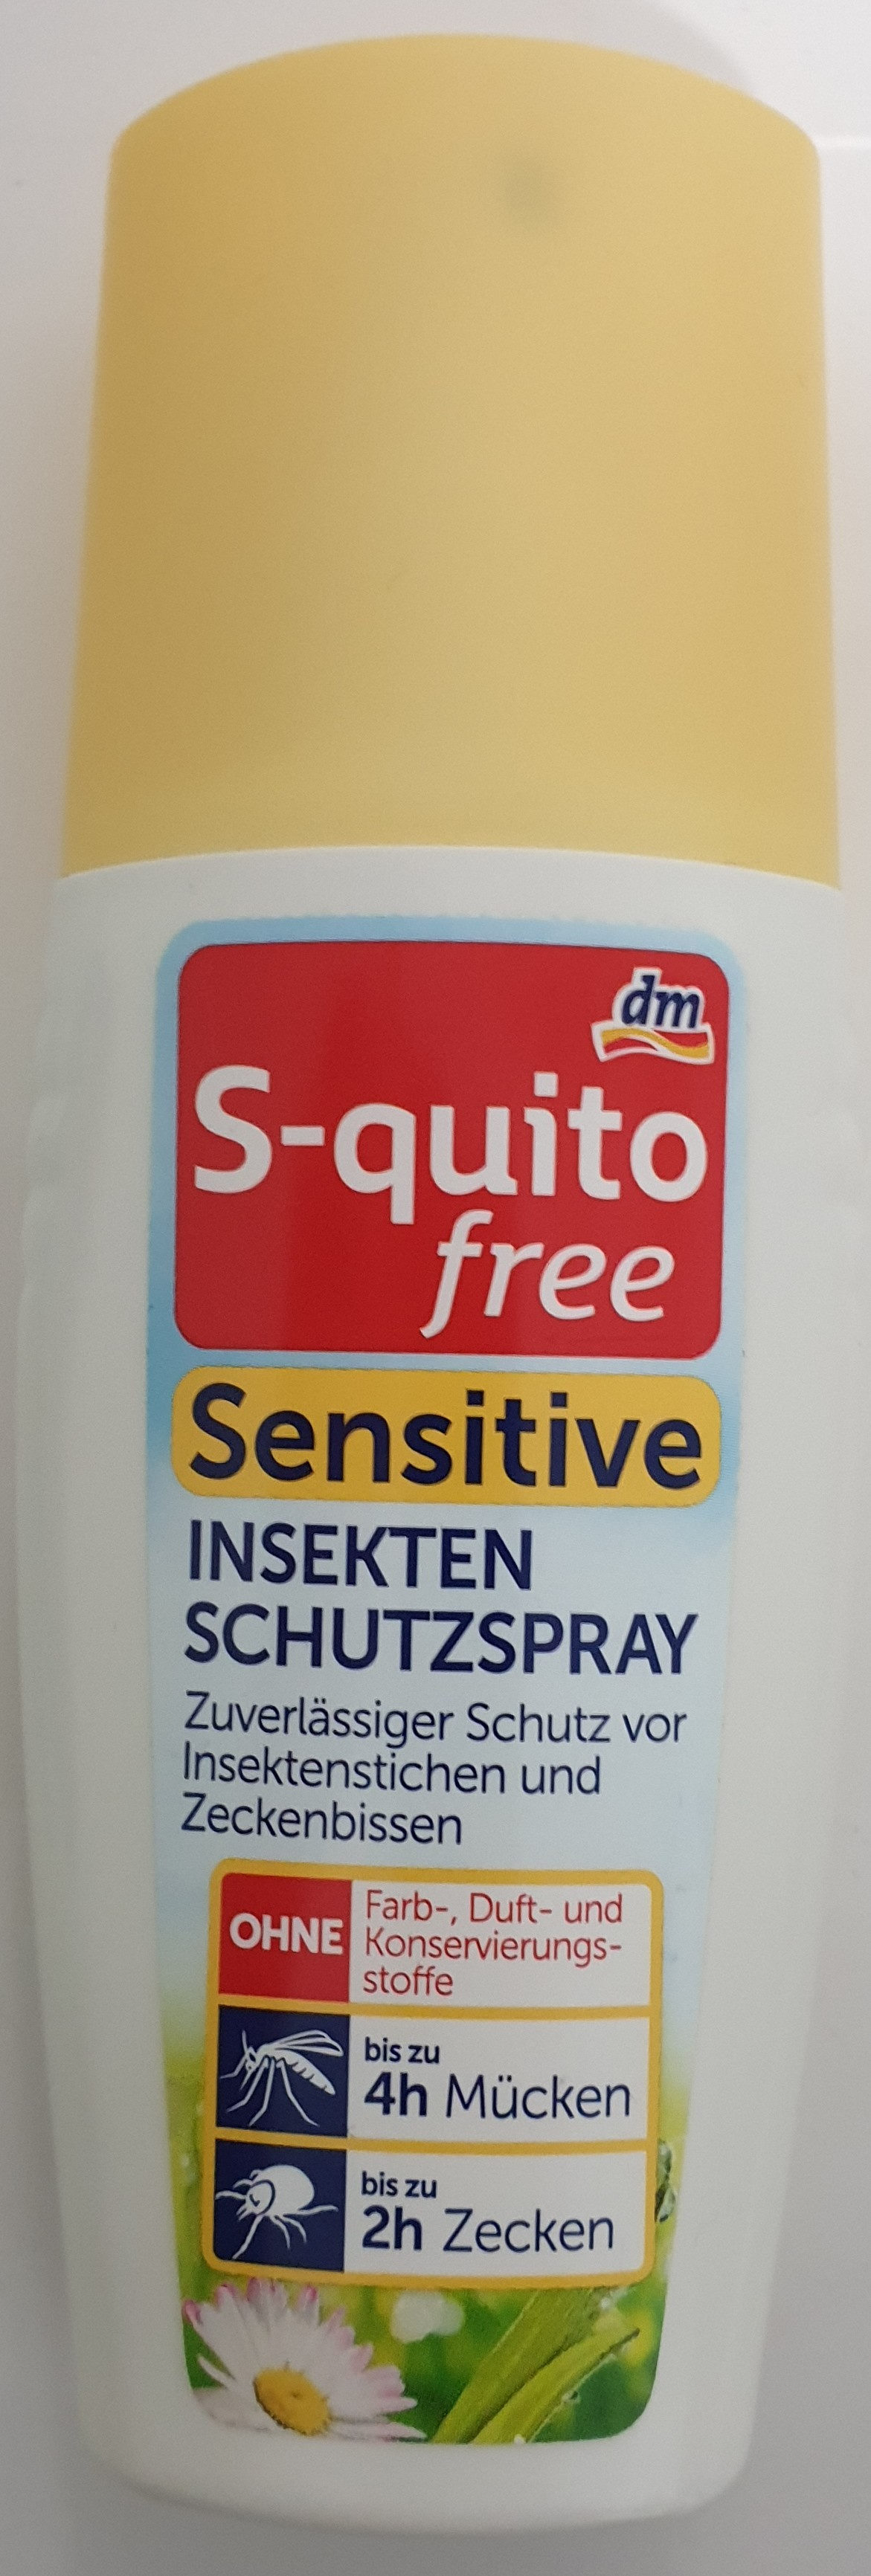 S-quito free Sensitive Insekten Schutzspray - Product - en